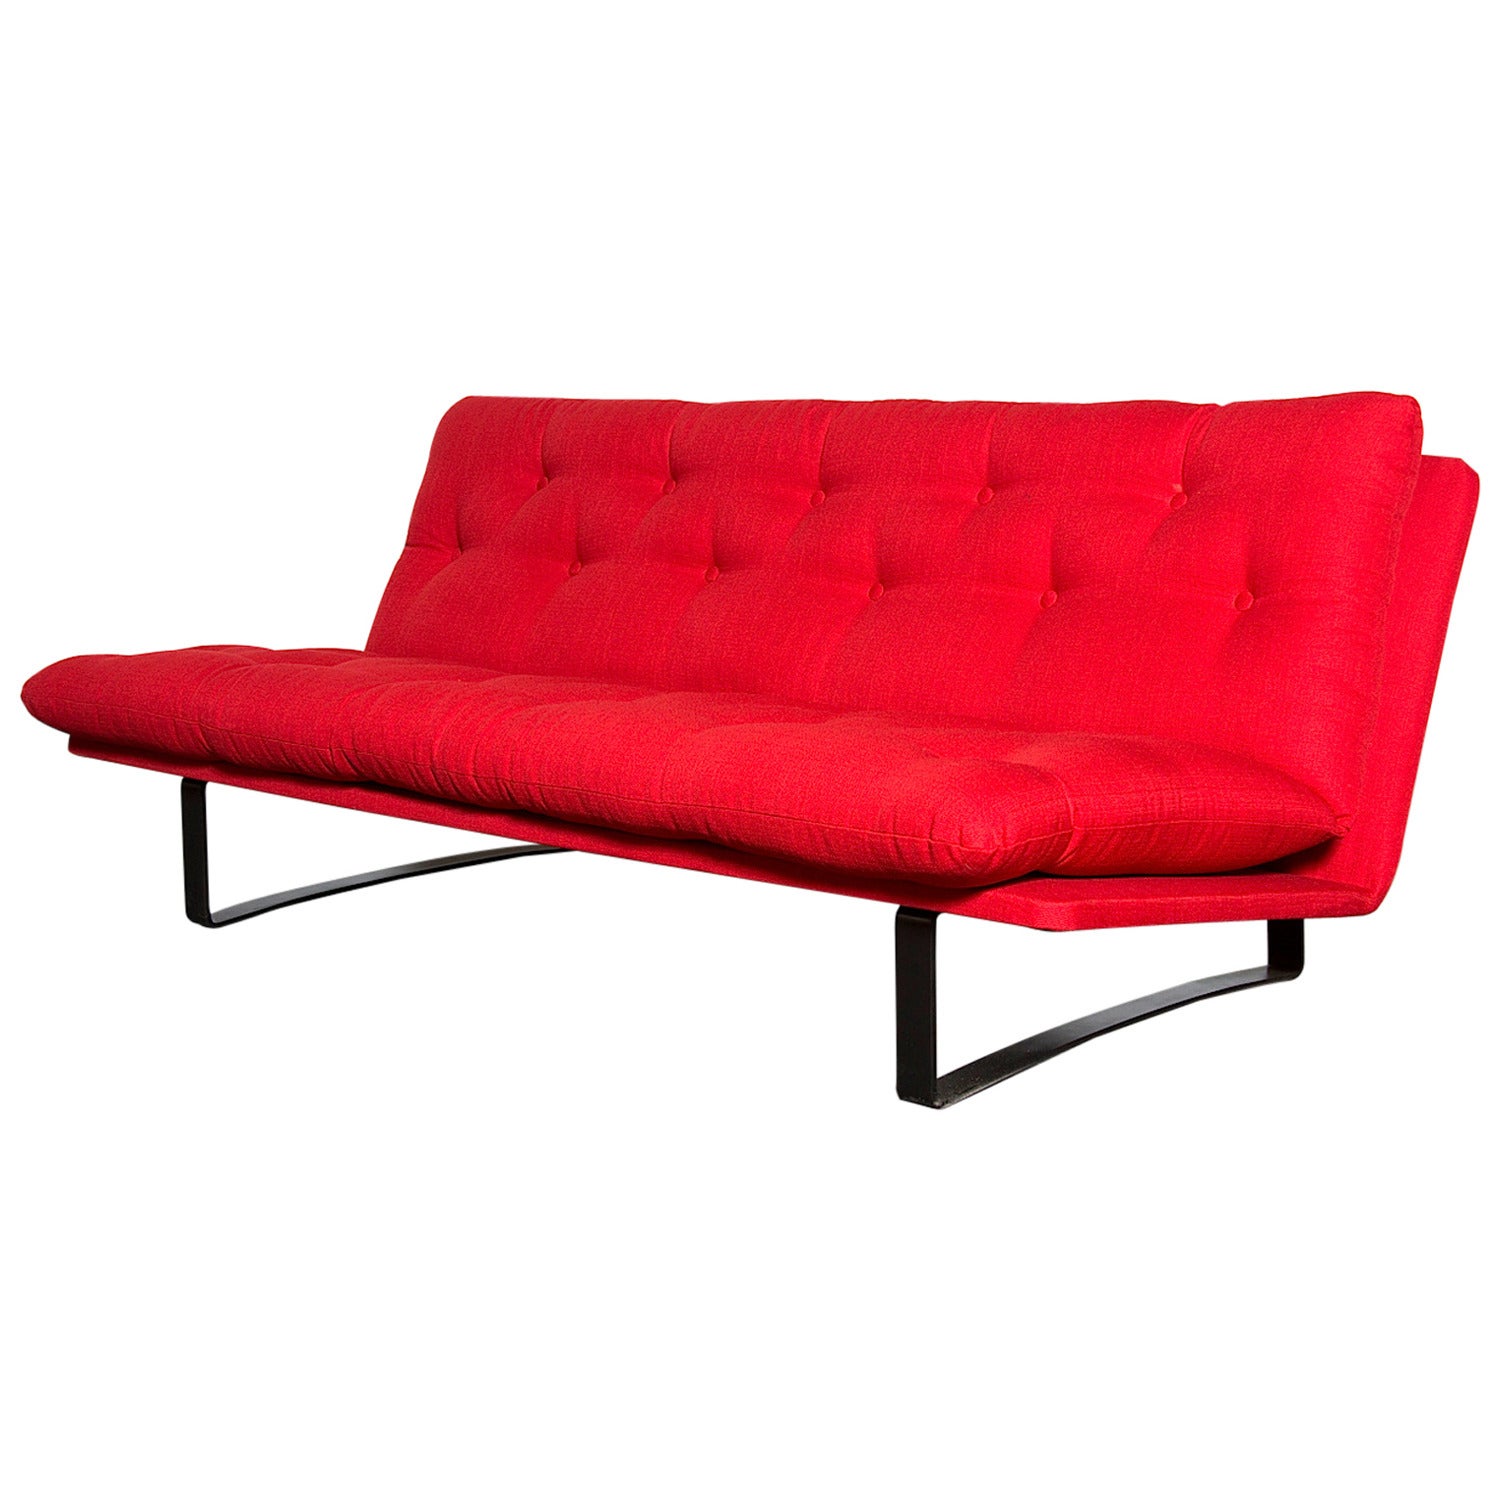 Kho Liang le getuftetes rotes gepolstertes Sofa 'Modell 662' für Artifort mit schwarzem Rahmen im Angebot